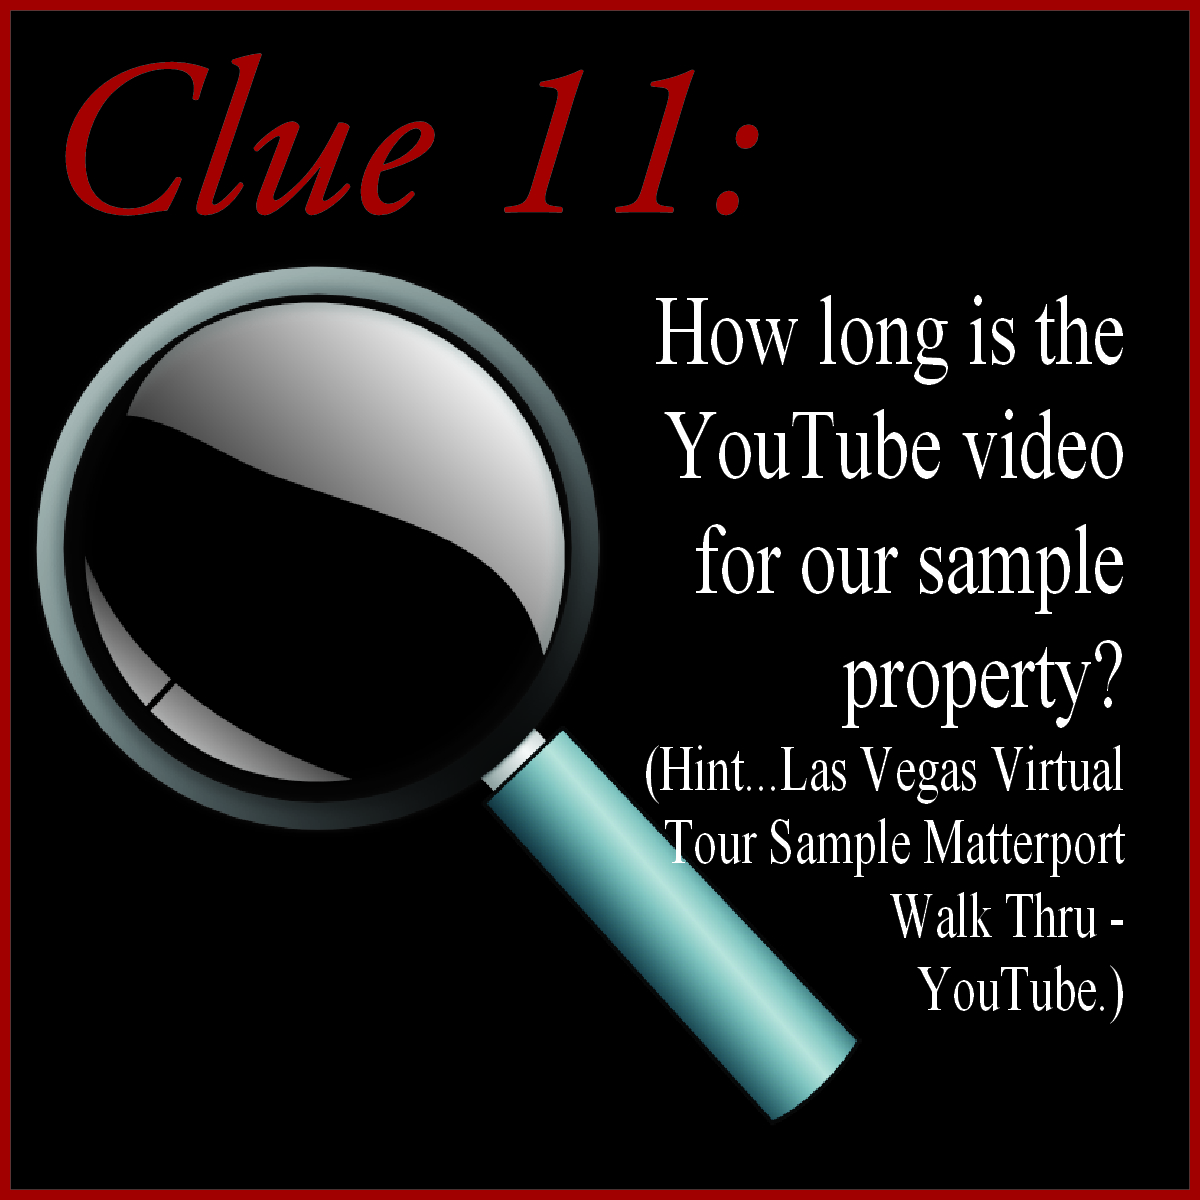 Las Vegas Virtual Tour Clue 11